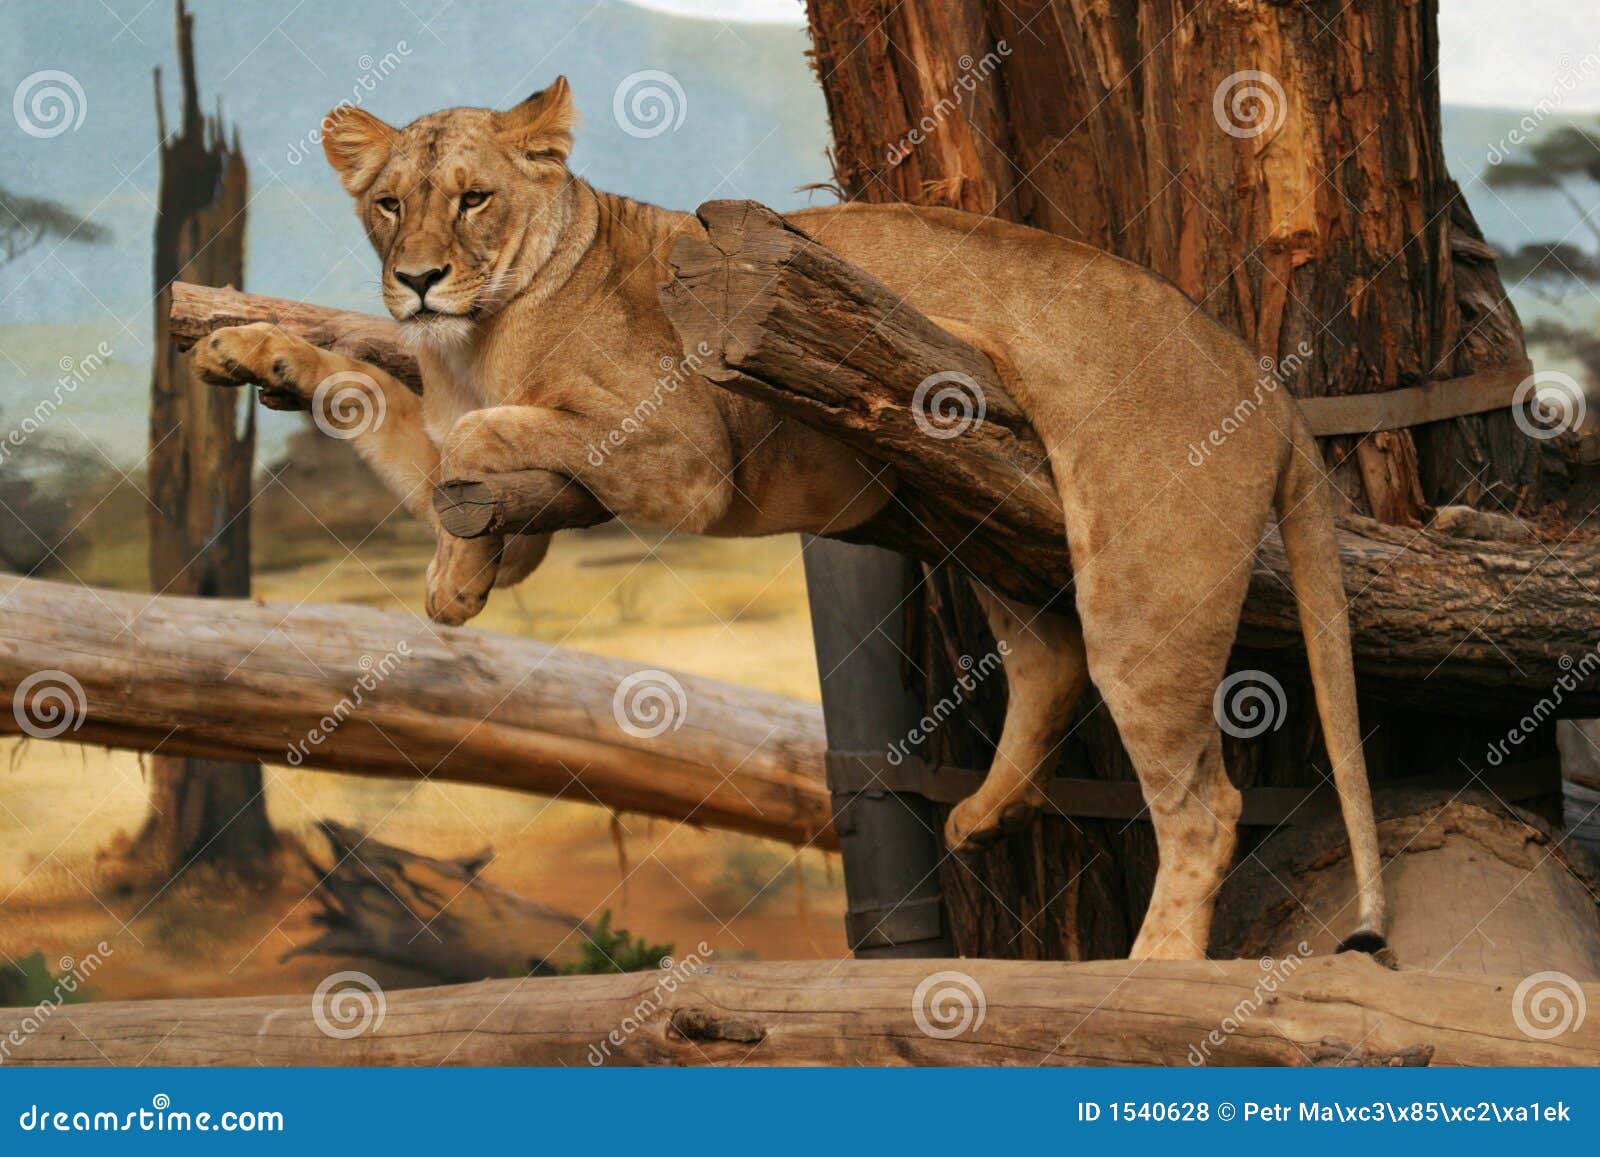 angola lion, lioness